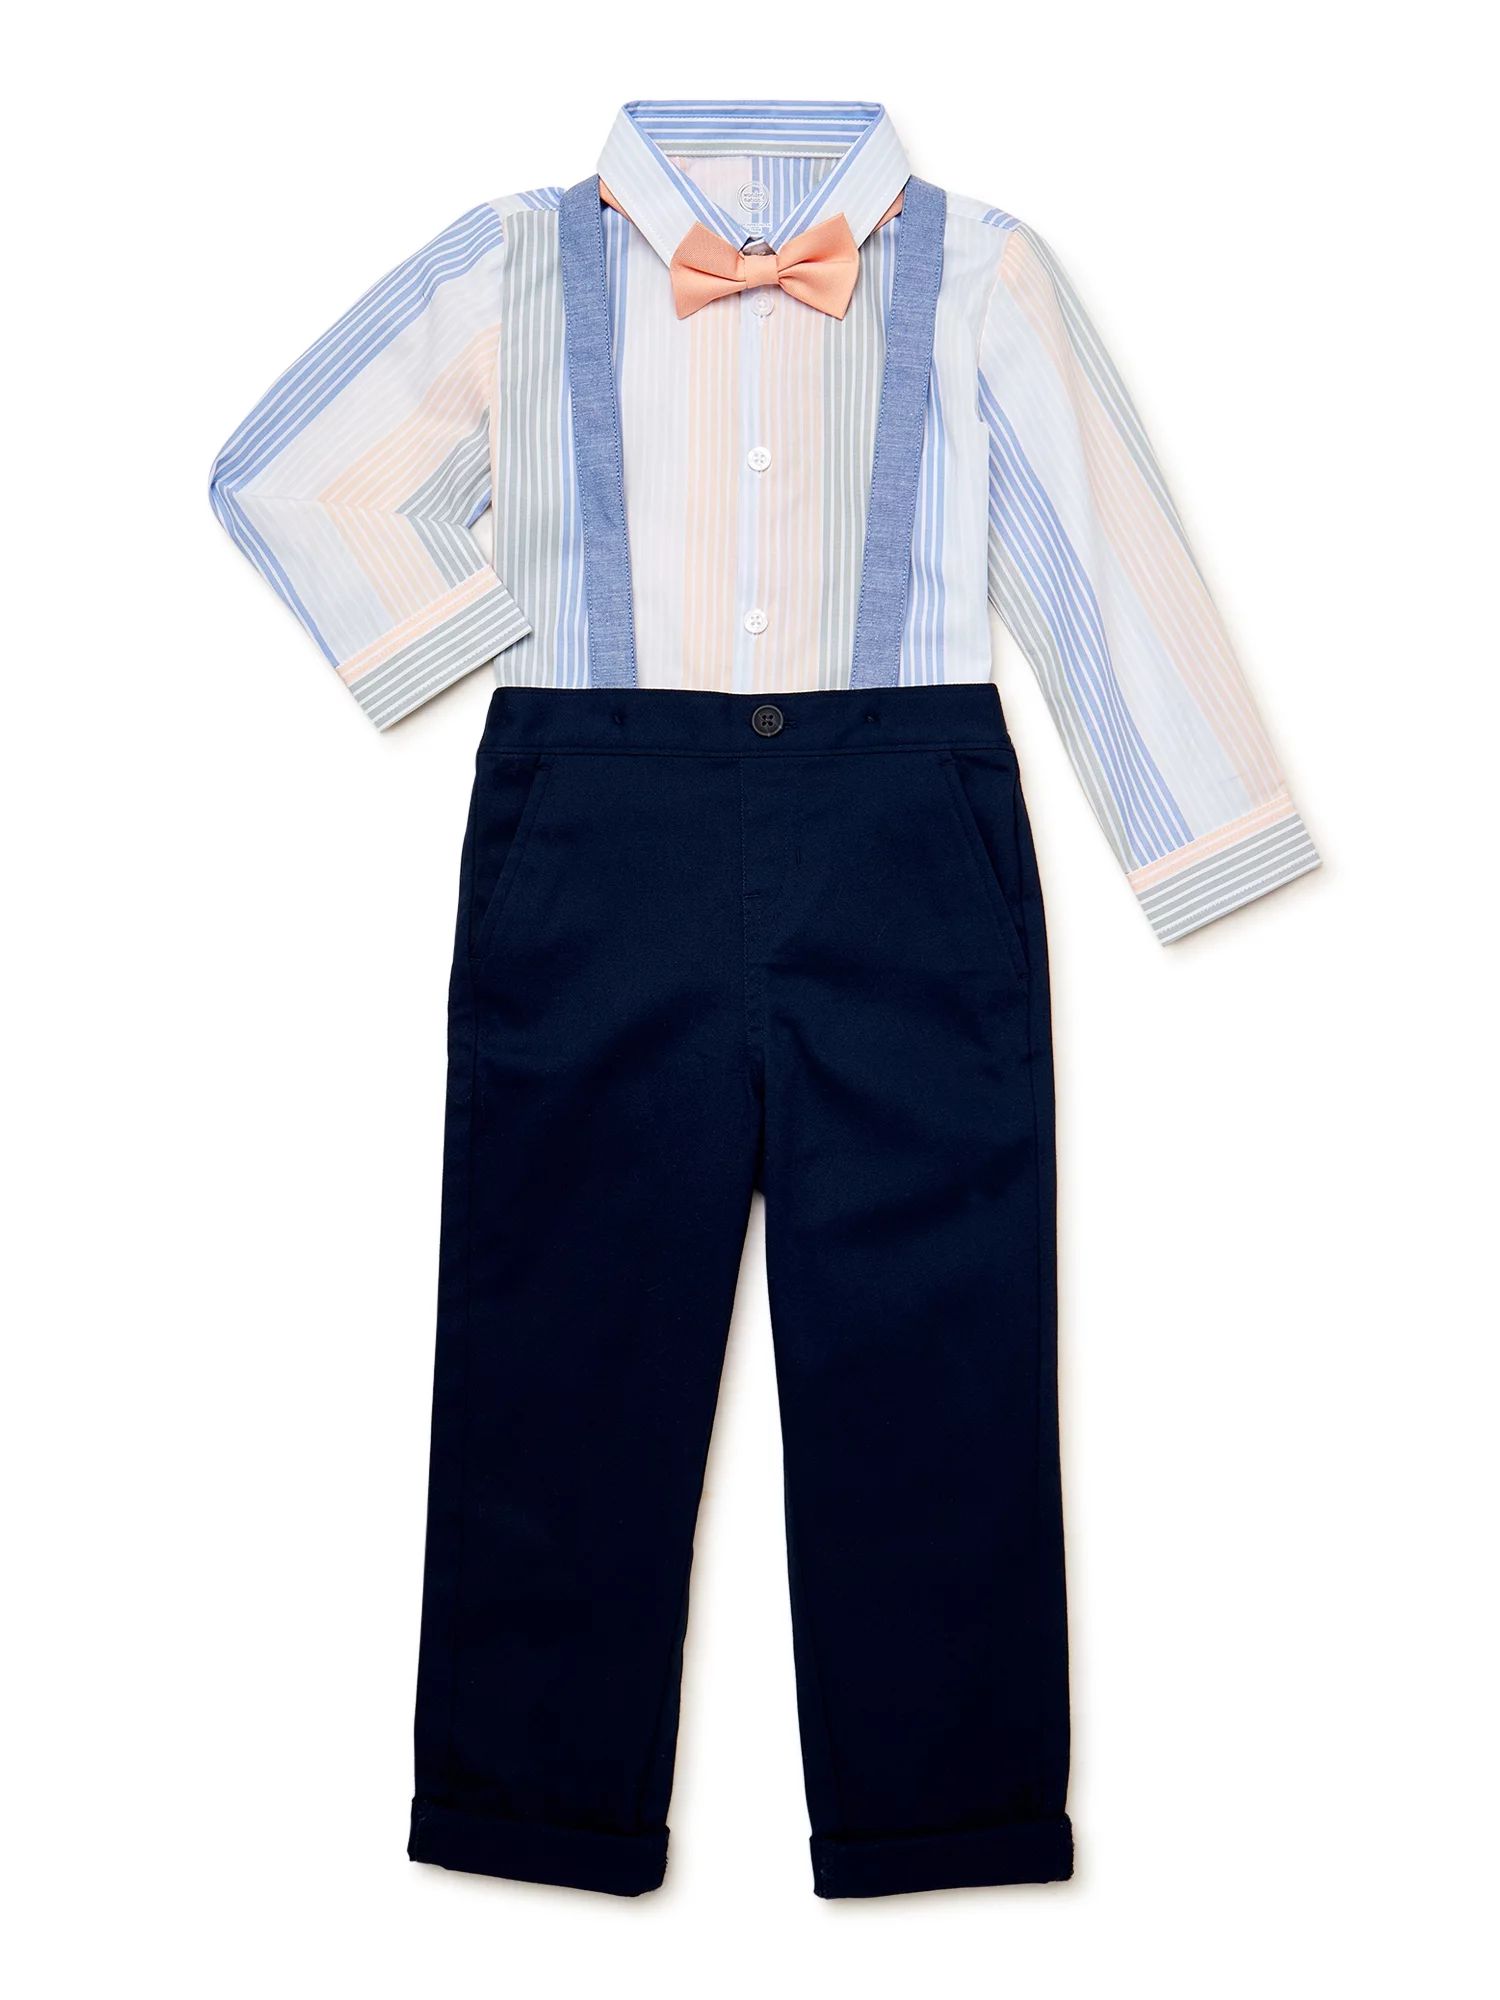 Wonder Nation Toddler Boys Shirt, Pants and Bowtie Outfit Set, 3-Piece, Sizes 12M-5T | Walmart (US)